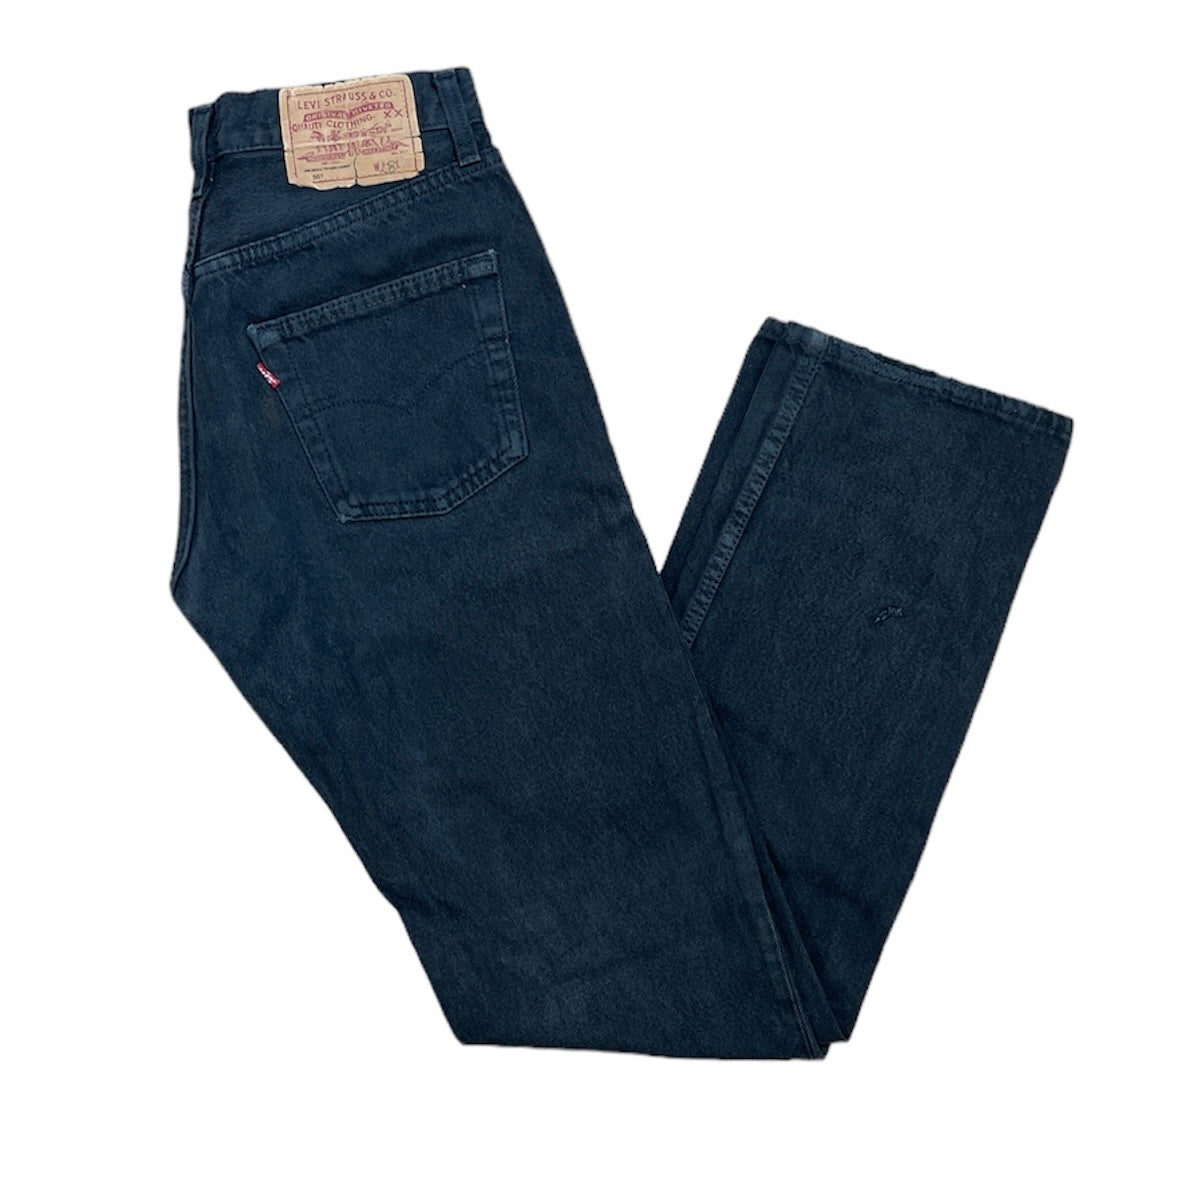 Vintage Levis 501 Vintage Black Jeans (W28)